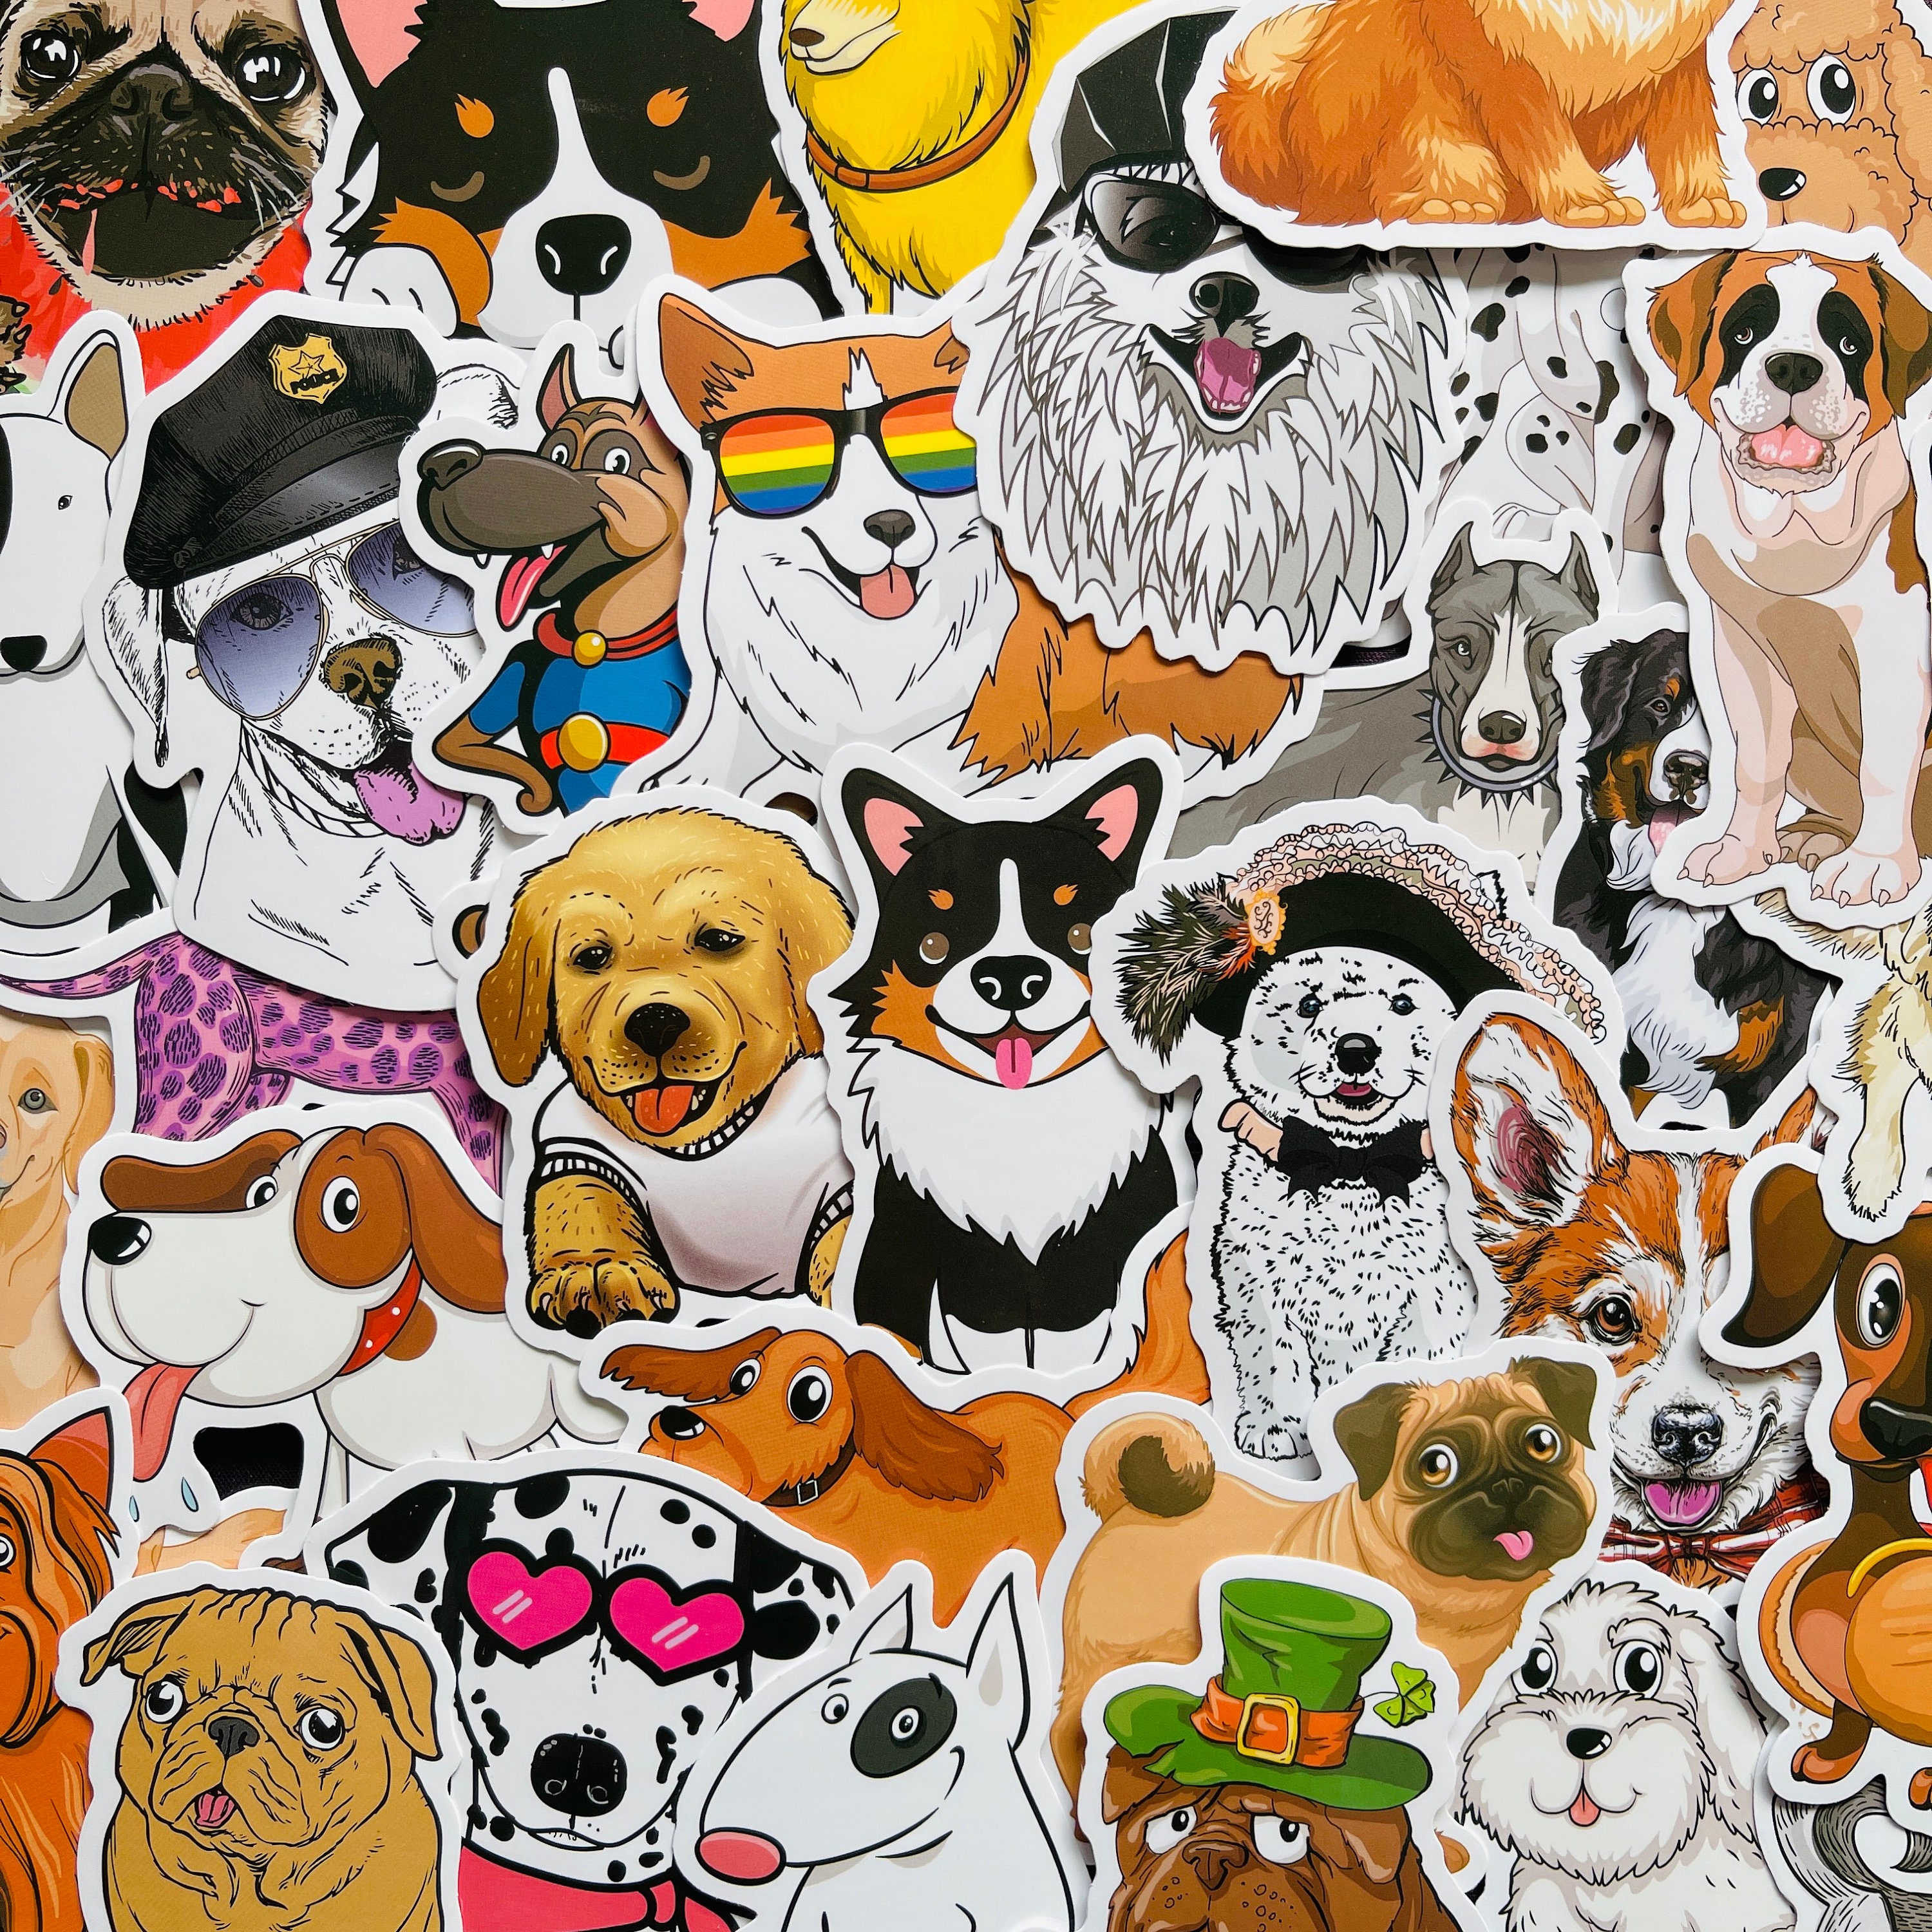 Cute Cartoon Dog Wall Art Sticker Large Vinyl Transfer Graphic Decal Decor x40 